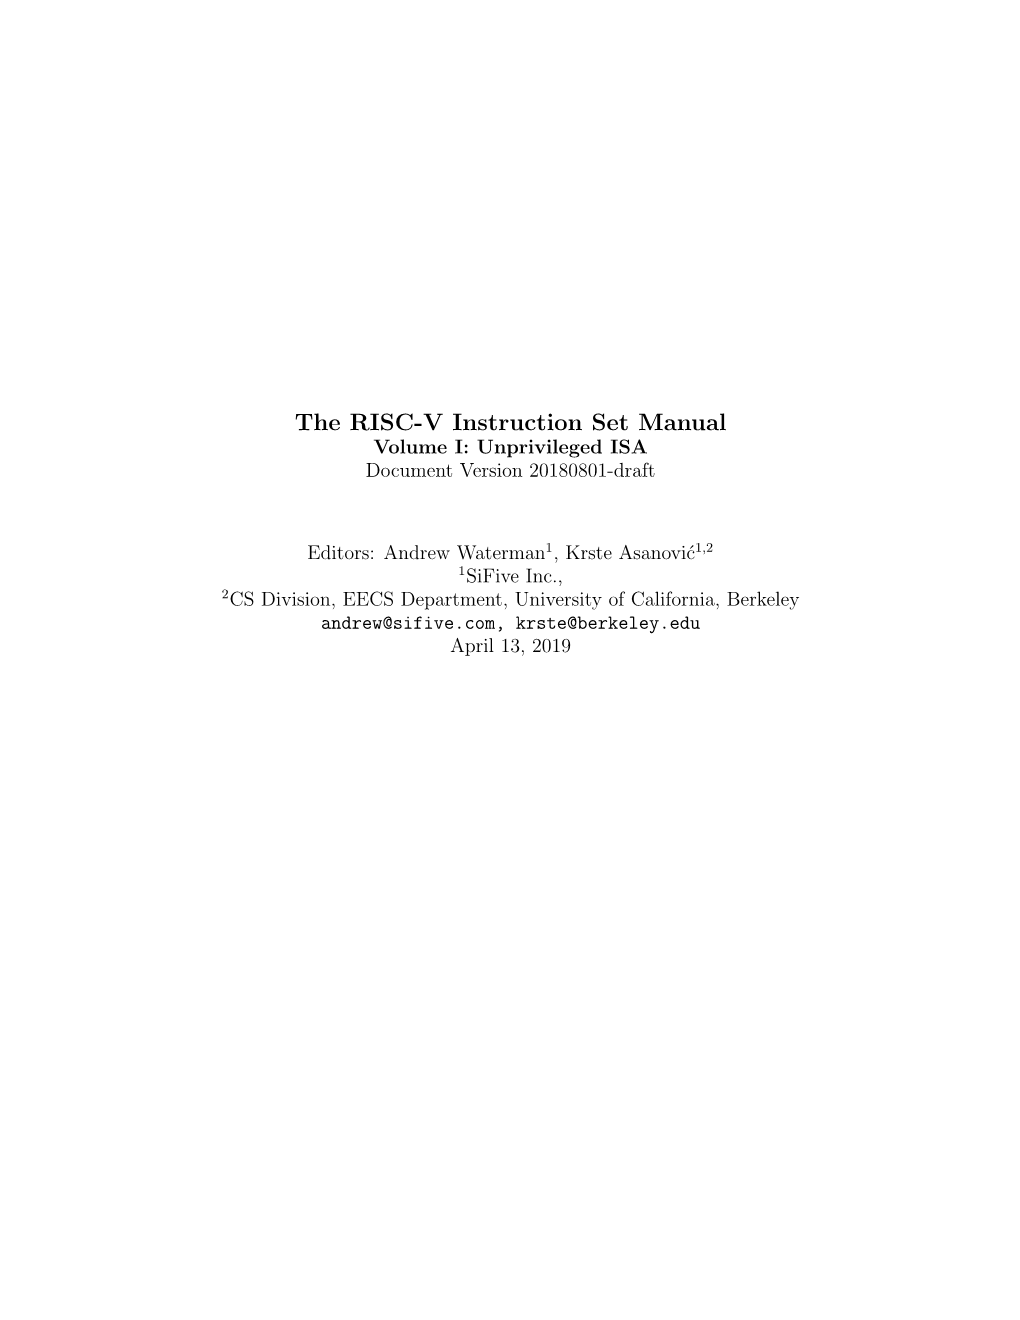 The RISC-V Instruction Set Manual Volume I: Unprivileged ISA Document Version 20180801-Draft